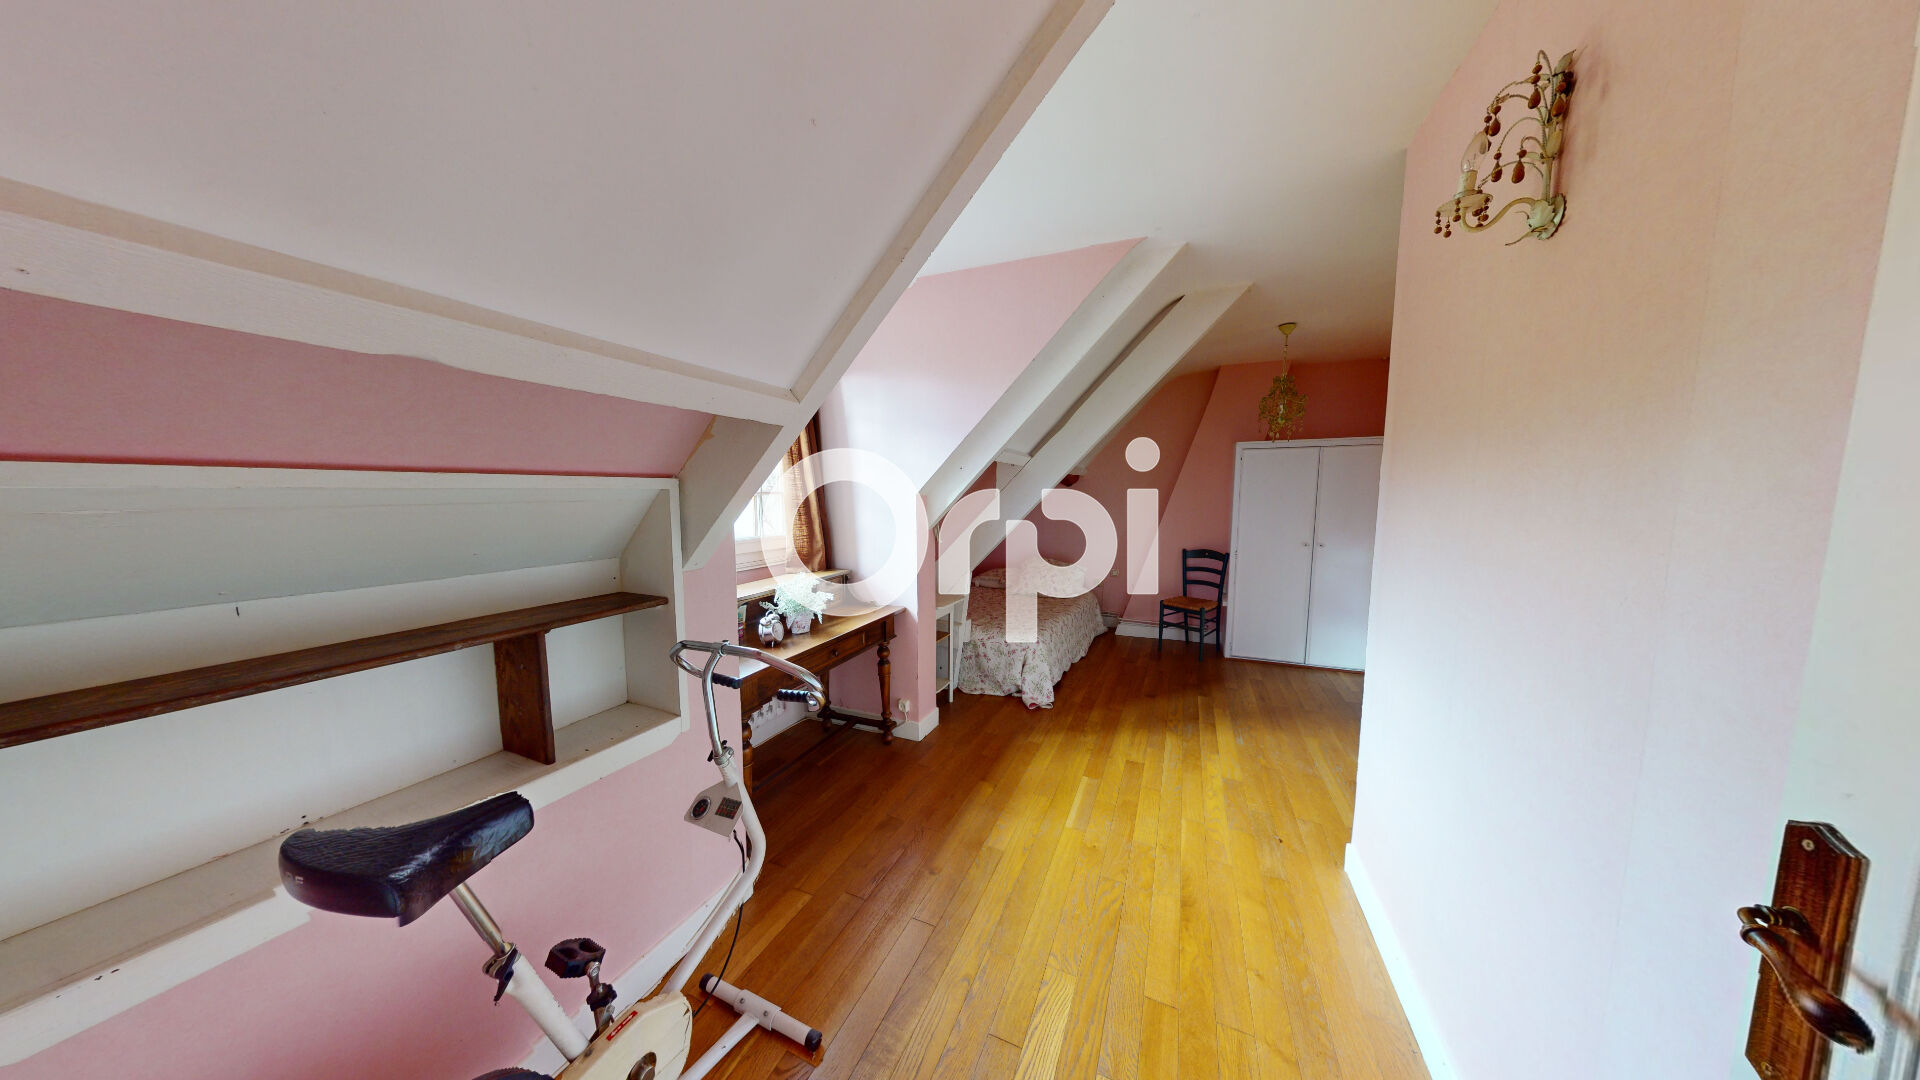 Maison a louer osny - 5 pièce(s) - 130 m2 - Surfyn